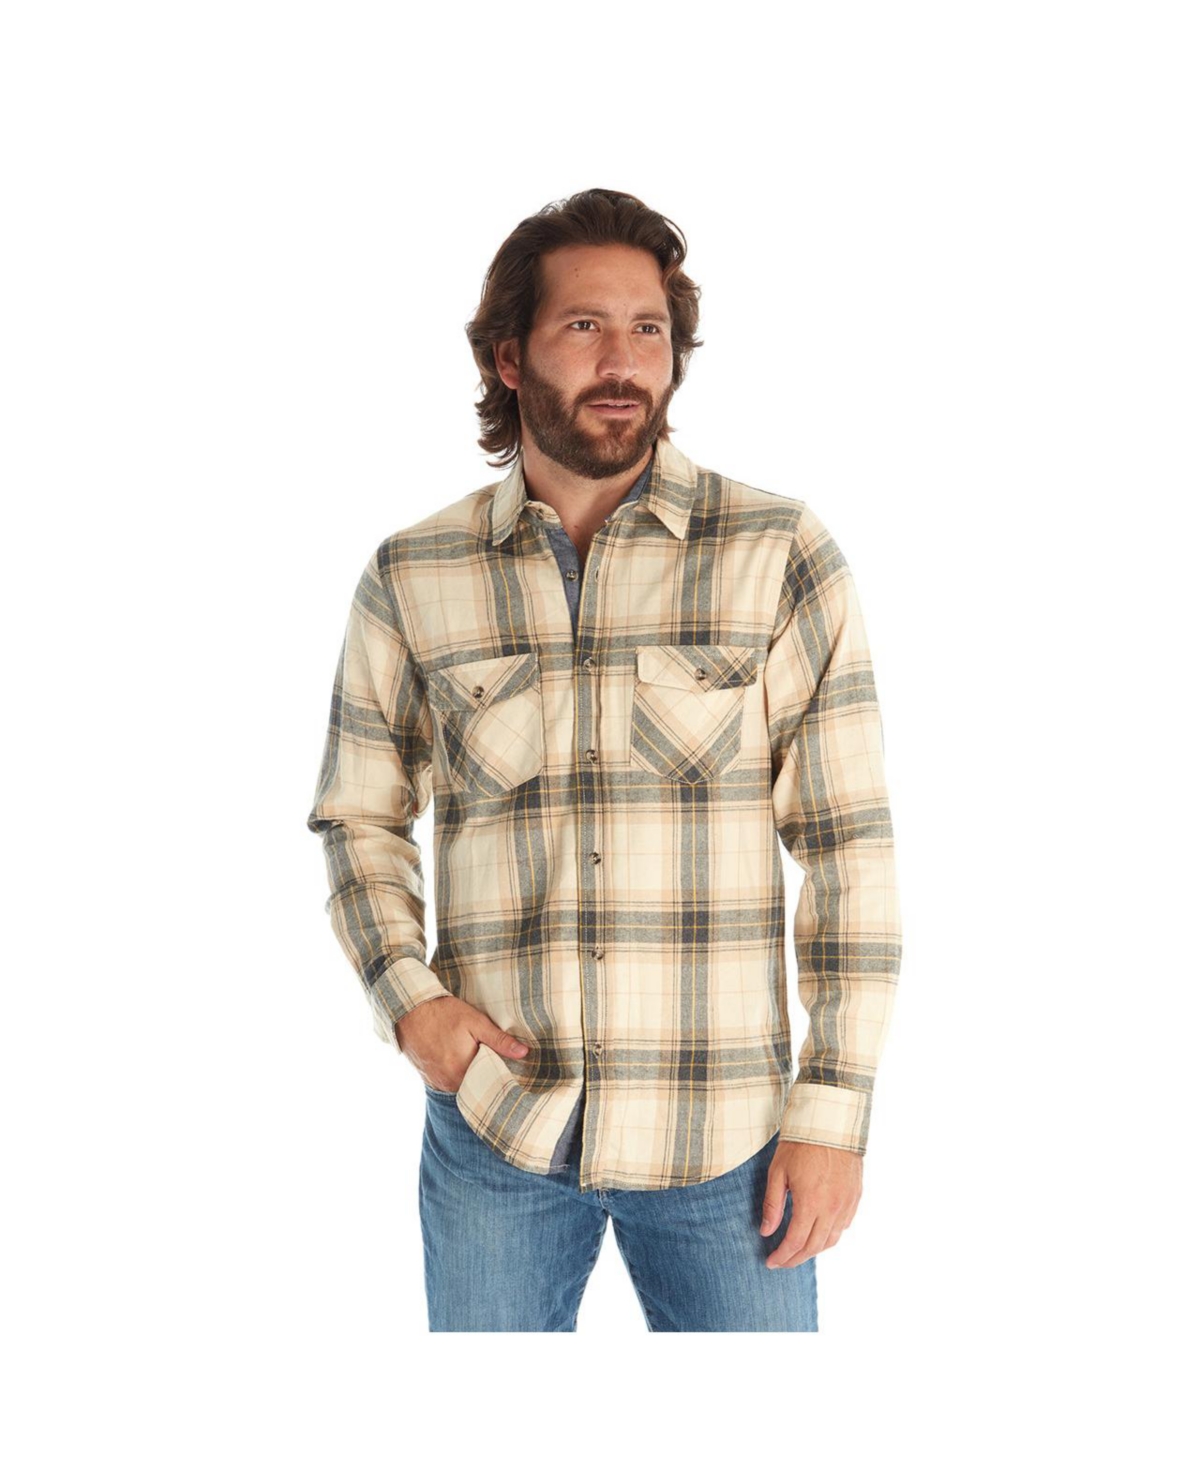 Clothing Men's Flannel Long Sleeves Shirt - Latte